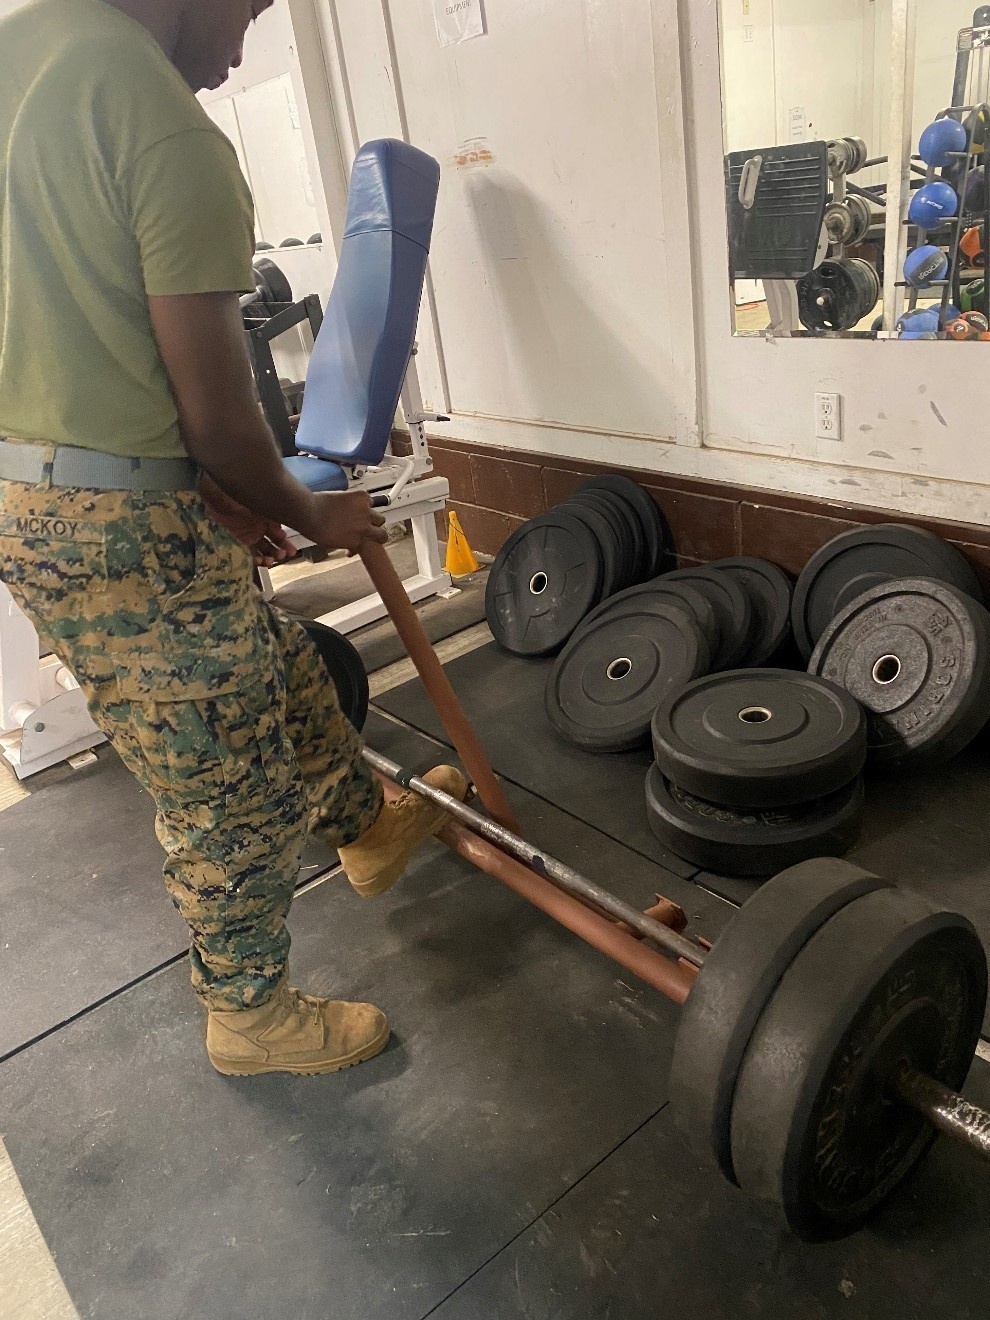 7th Engineer Support Battalion Marines install a new deadlift bar